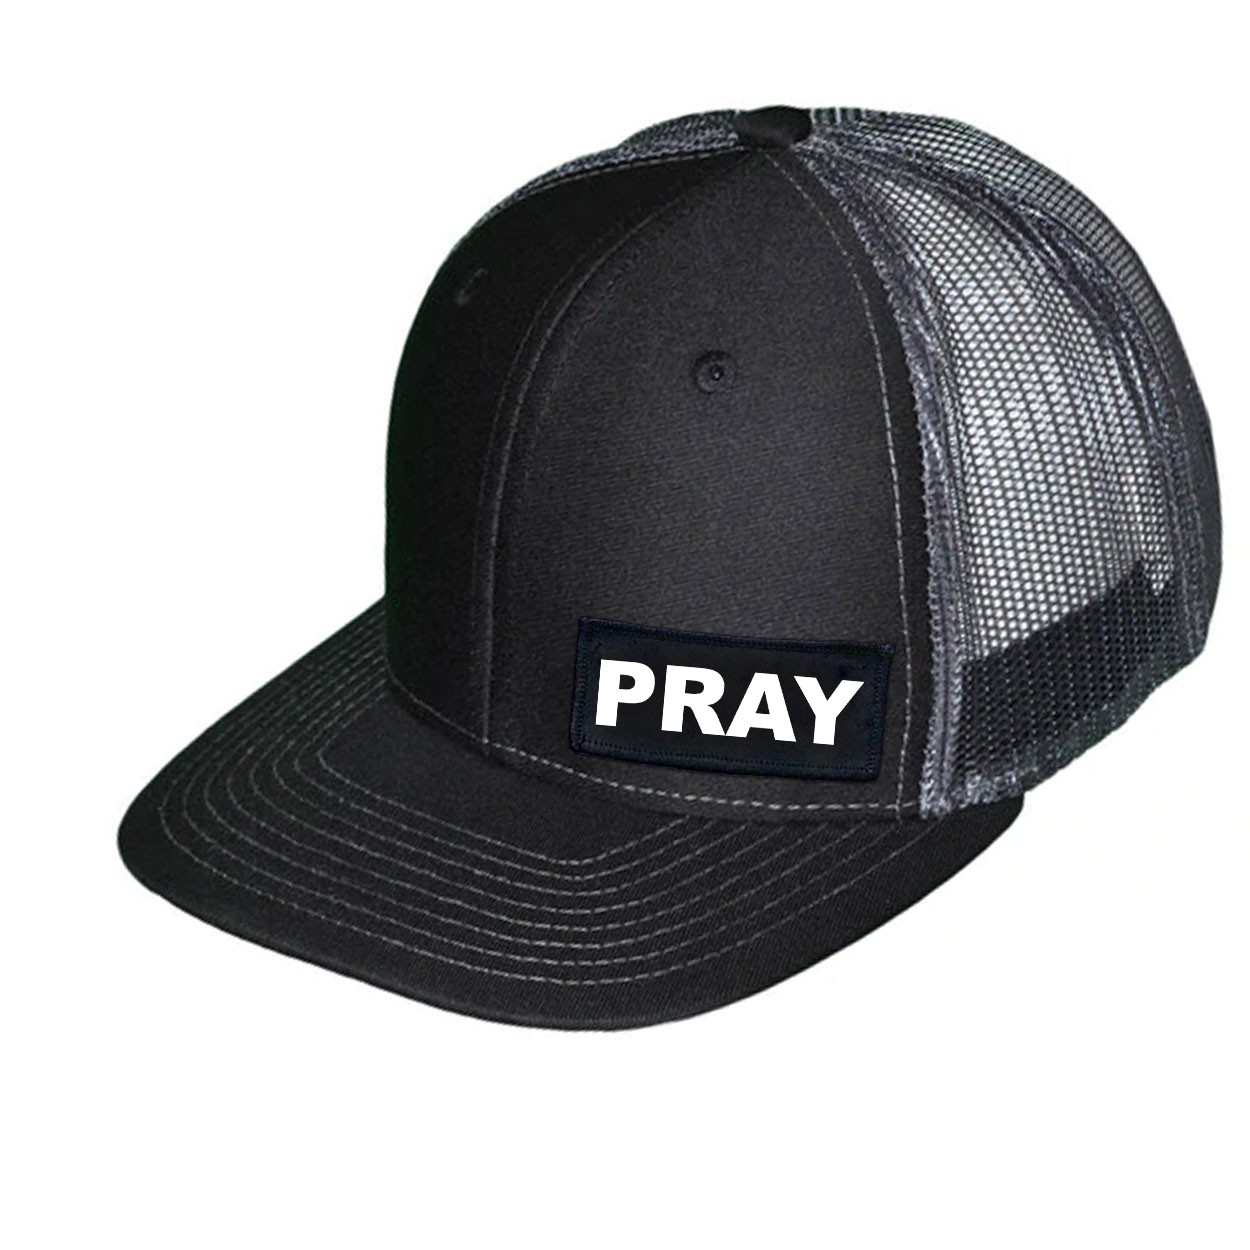 Pray Brand Logo Night Out Woven Patch Snapback Trucker Hat Black/Gray